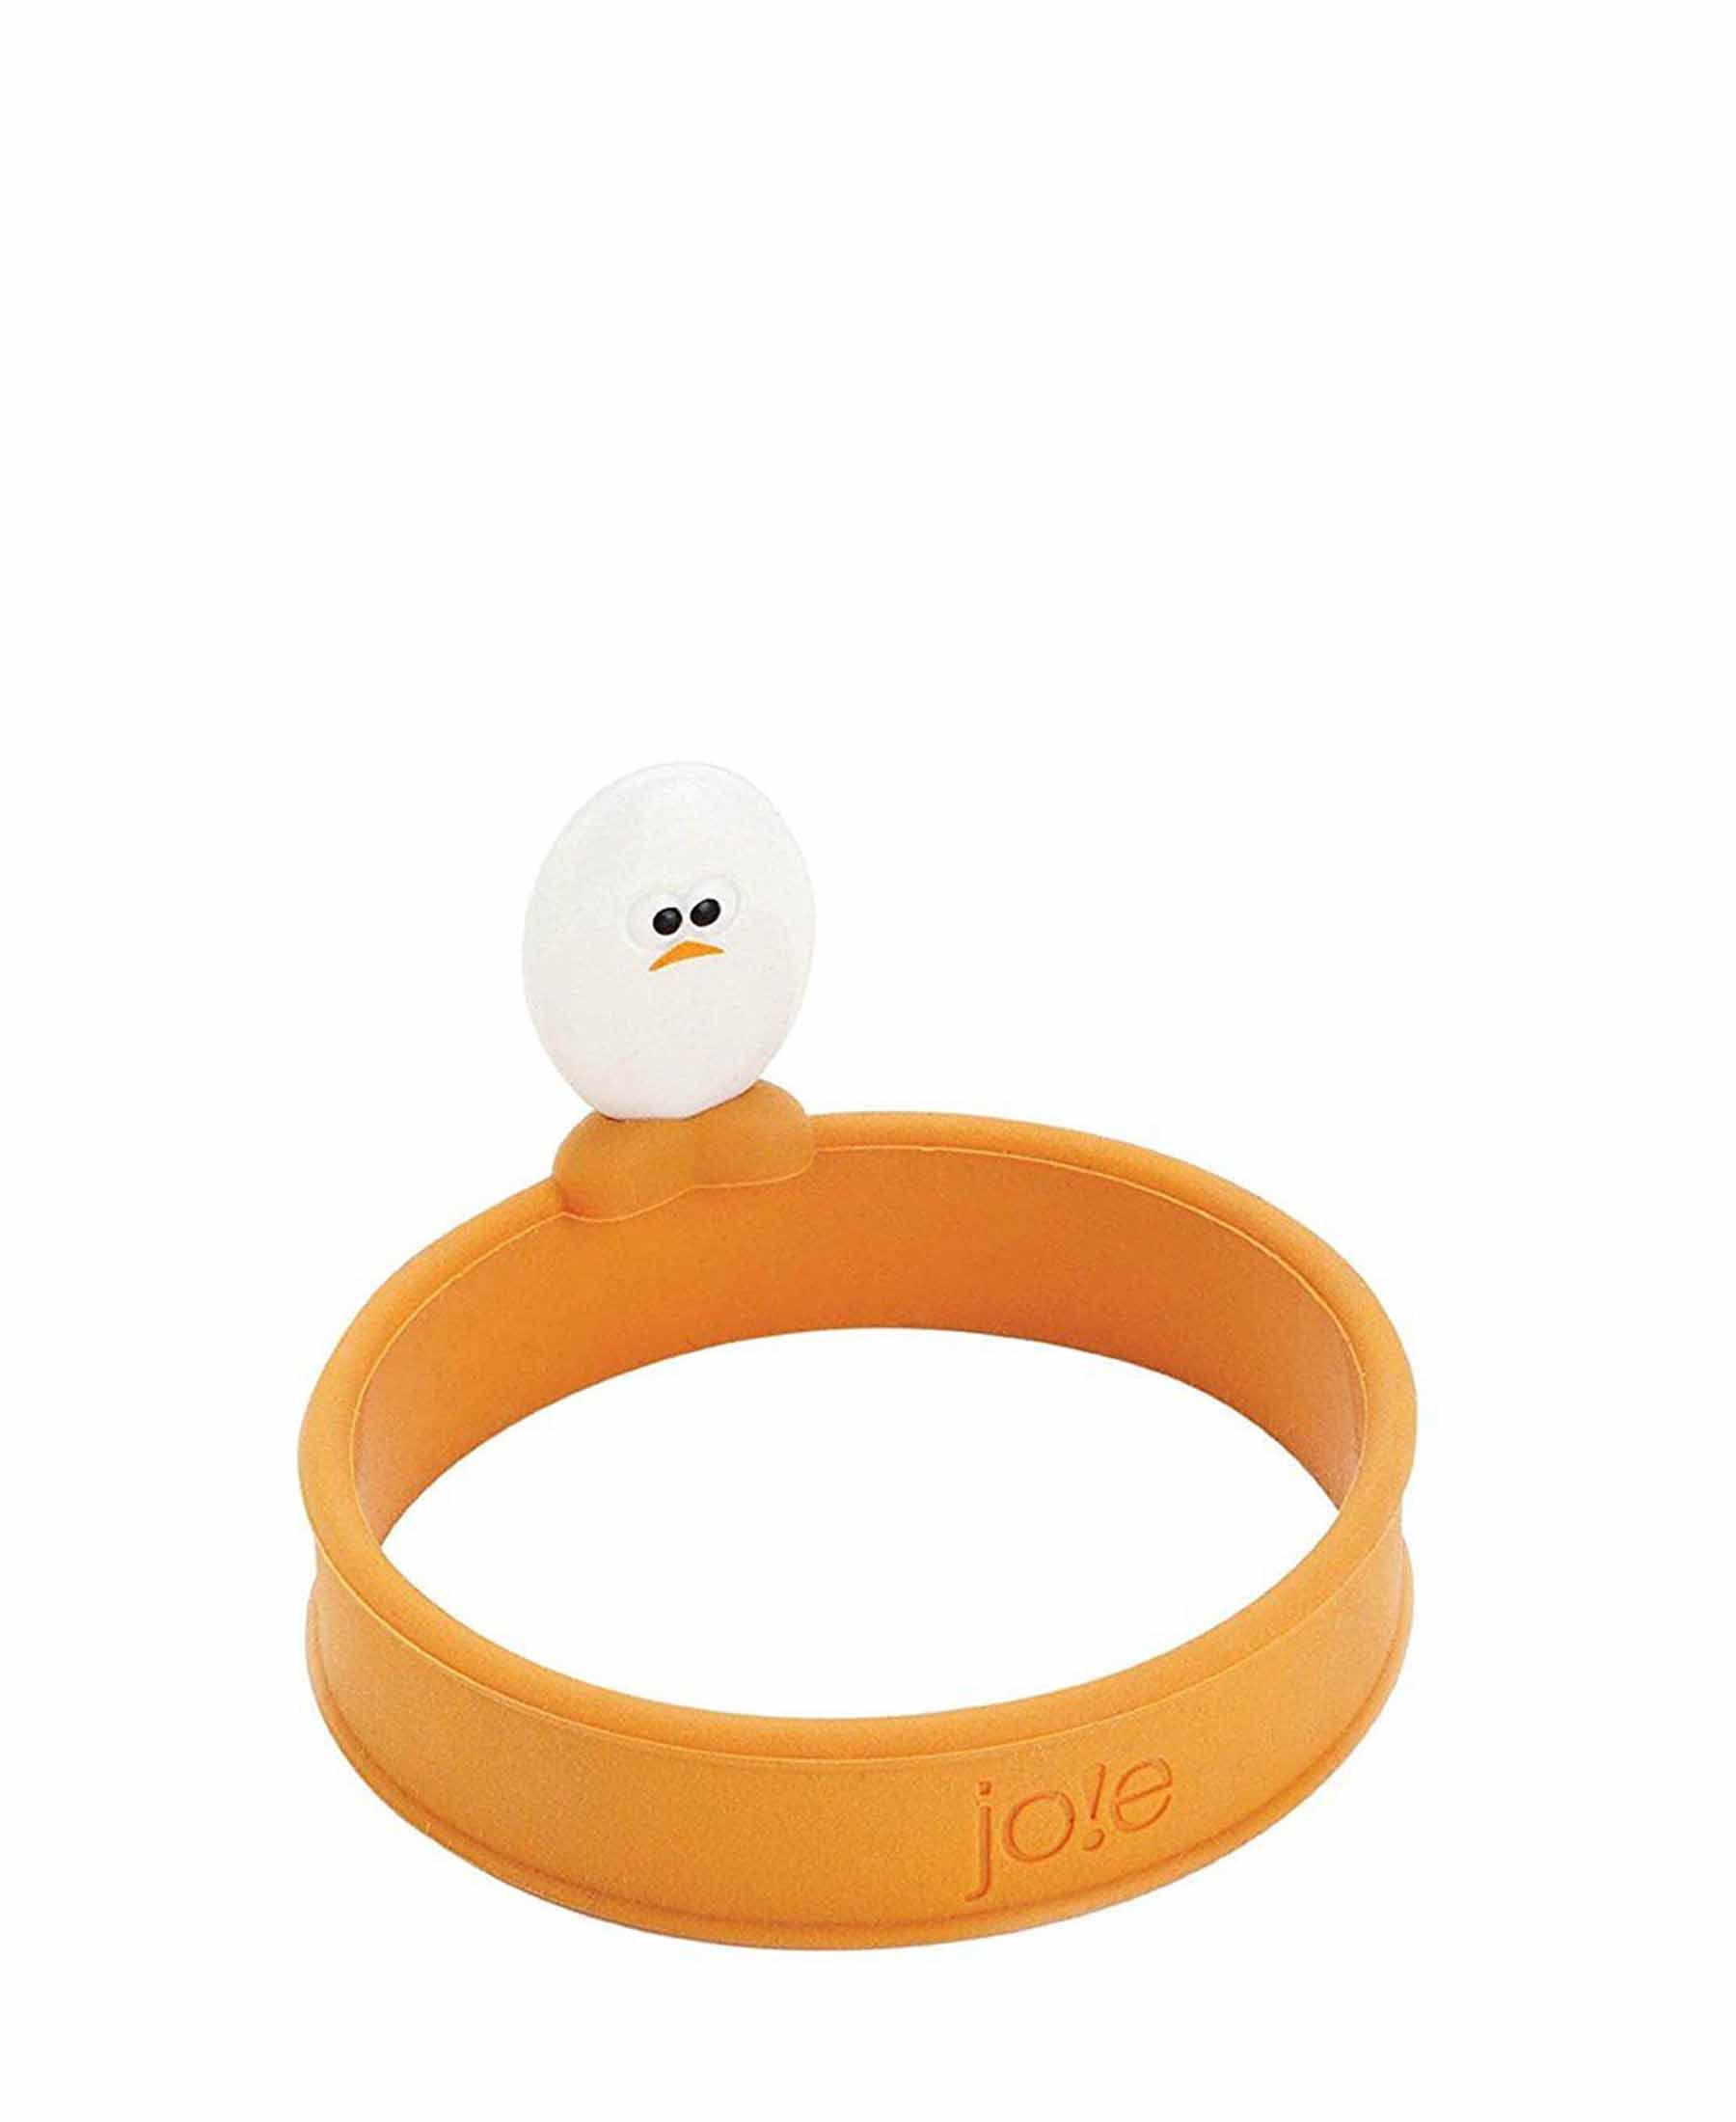 Joie Fry Pan Egg Ring - Orange